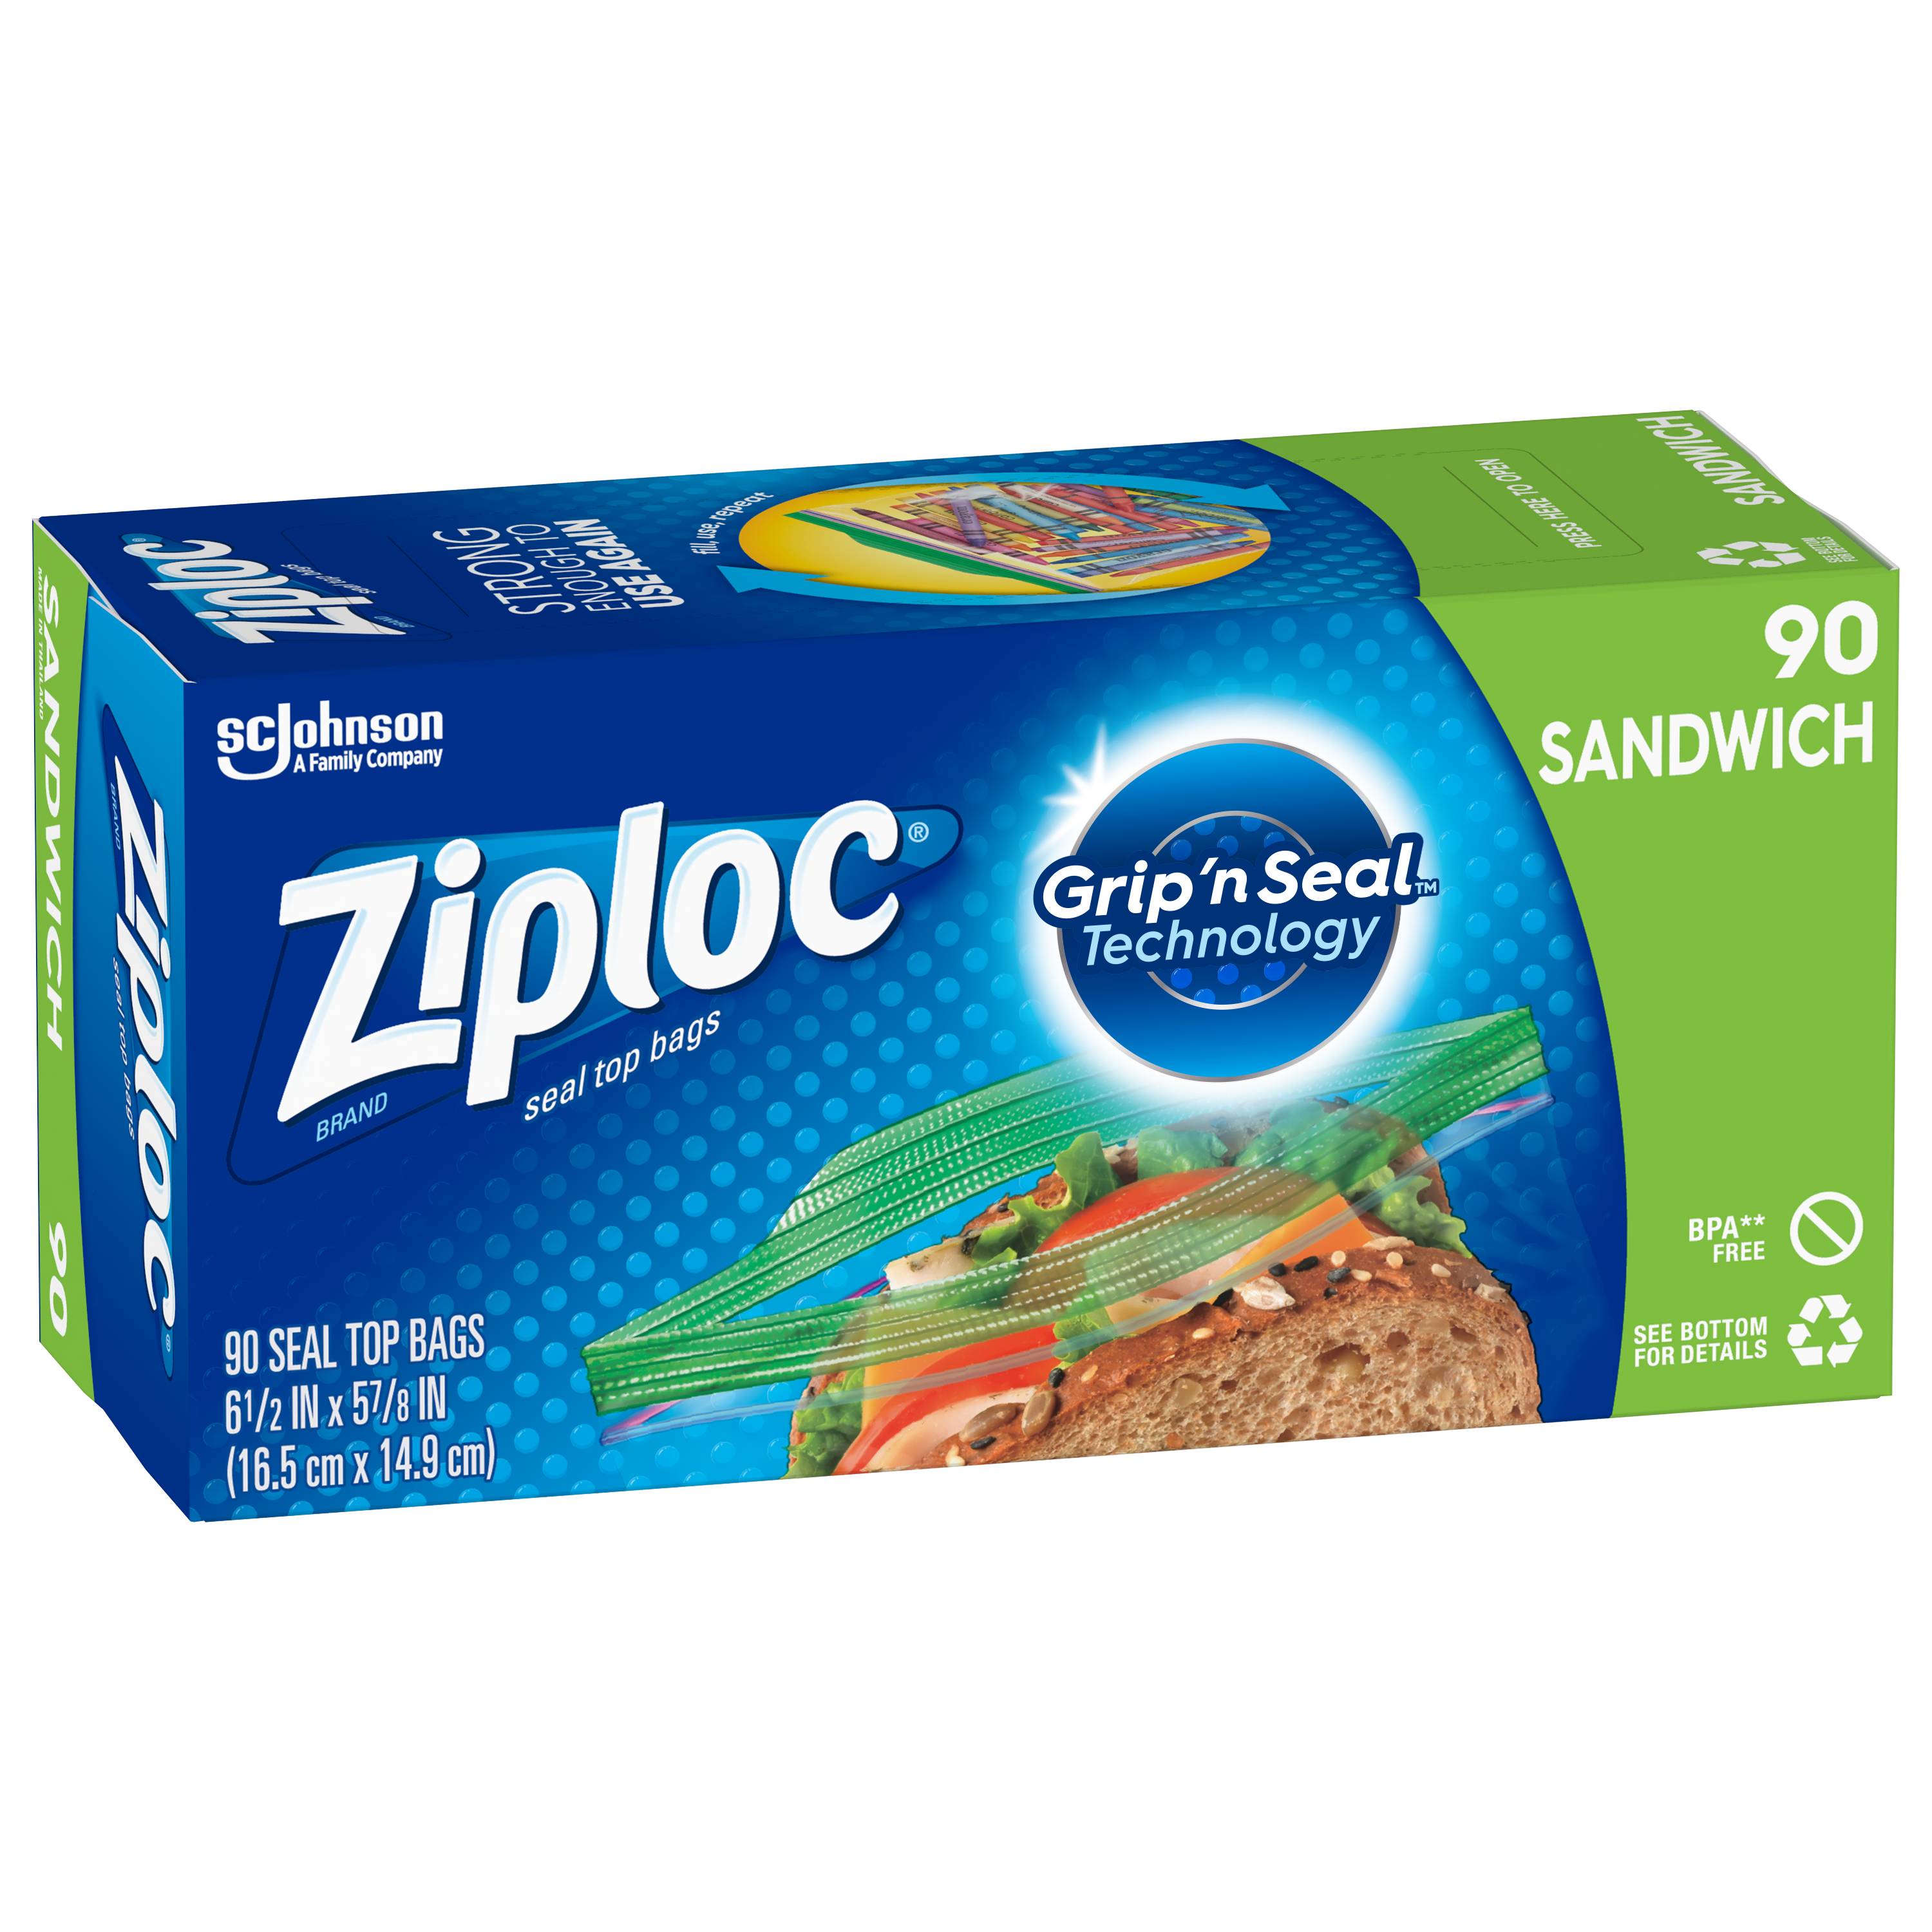 Ziploc Holiday Limited Edition Festive Designs Reusable Storage Quart Bags  - 24 Count